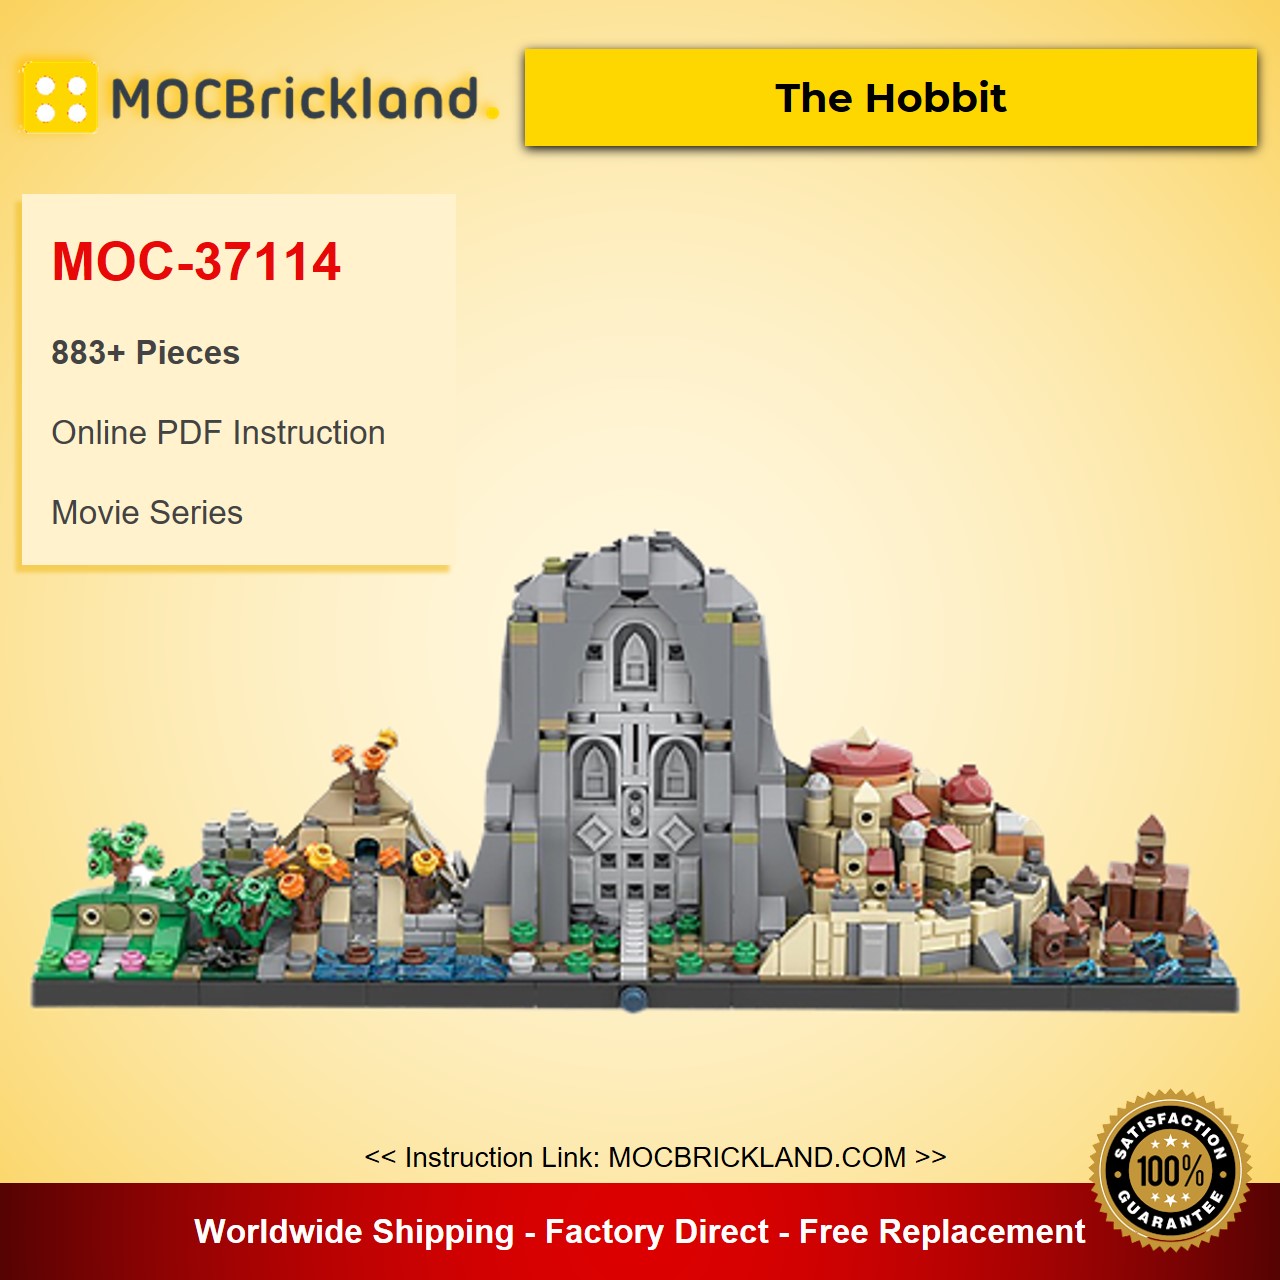 MOCBRICKLAND MOC-37114 The Hobbit